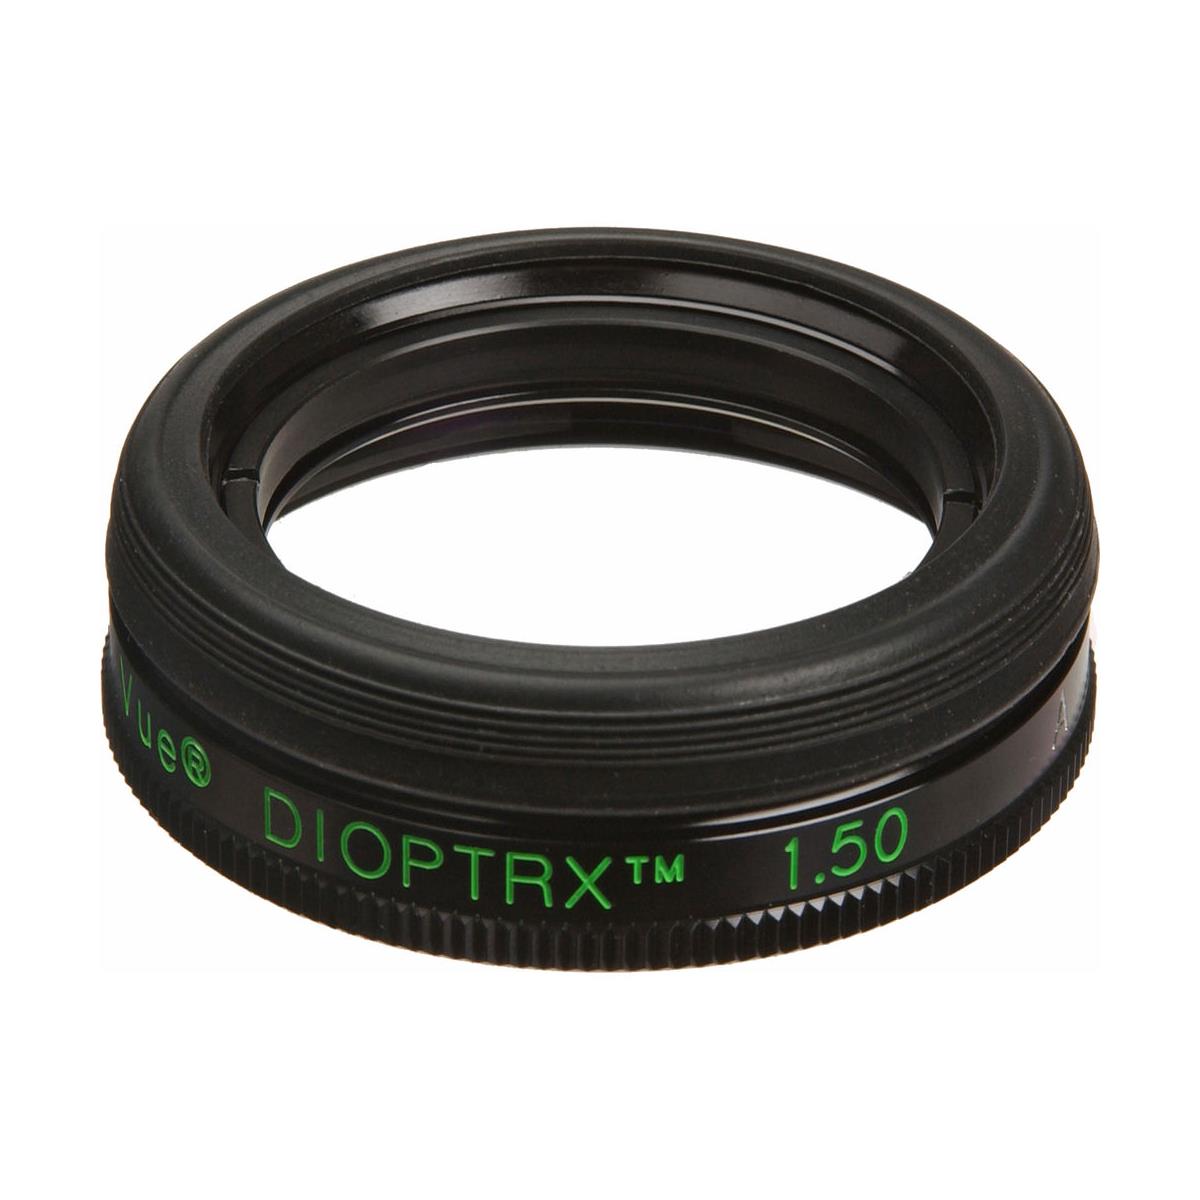 

Tele Vue Dioptrx Astigmatism Correcting Lens - 1.50